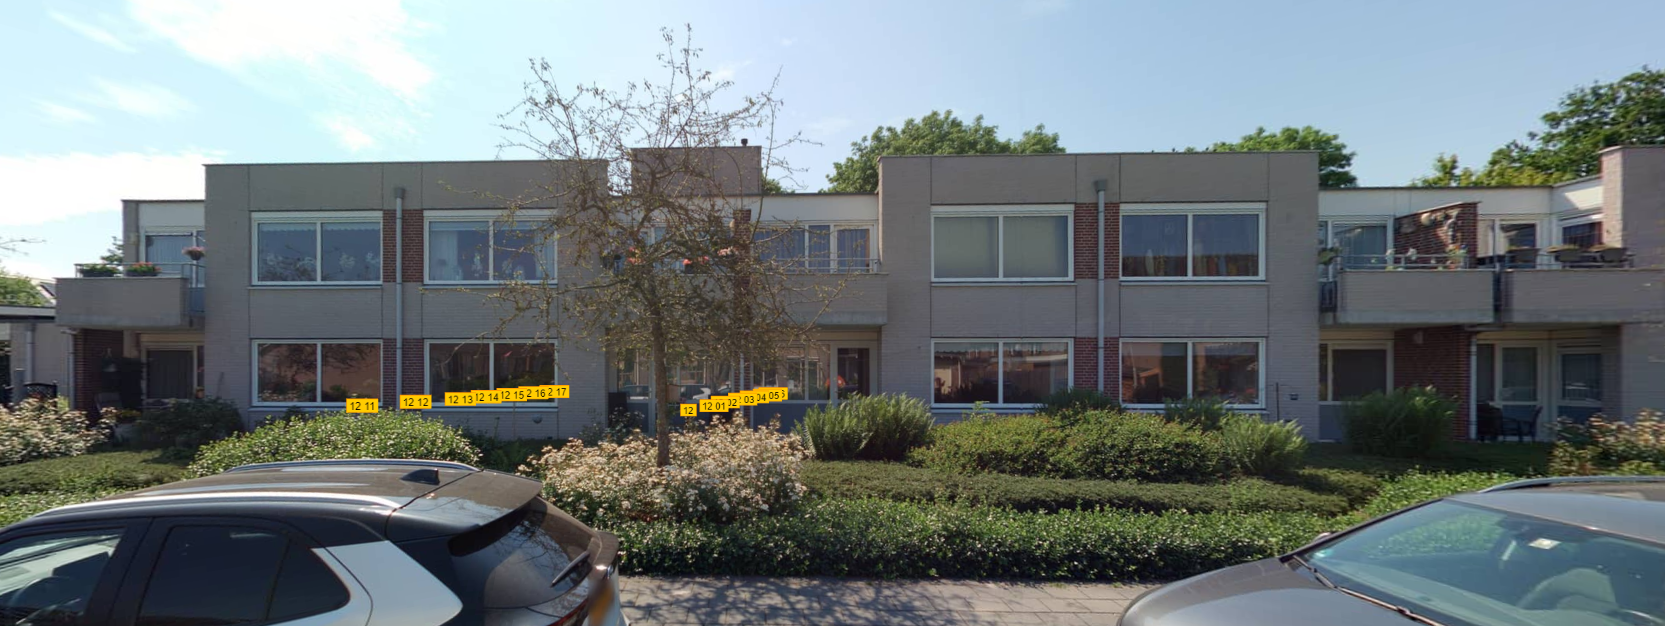 Dominee V. Halsemastraat 12, 7948 BK Nijeveen, Nederland